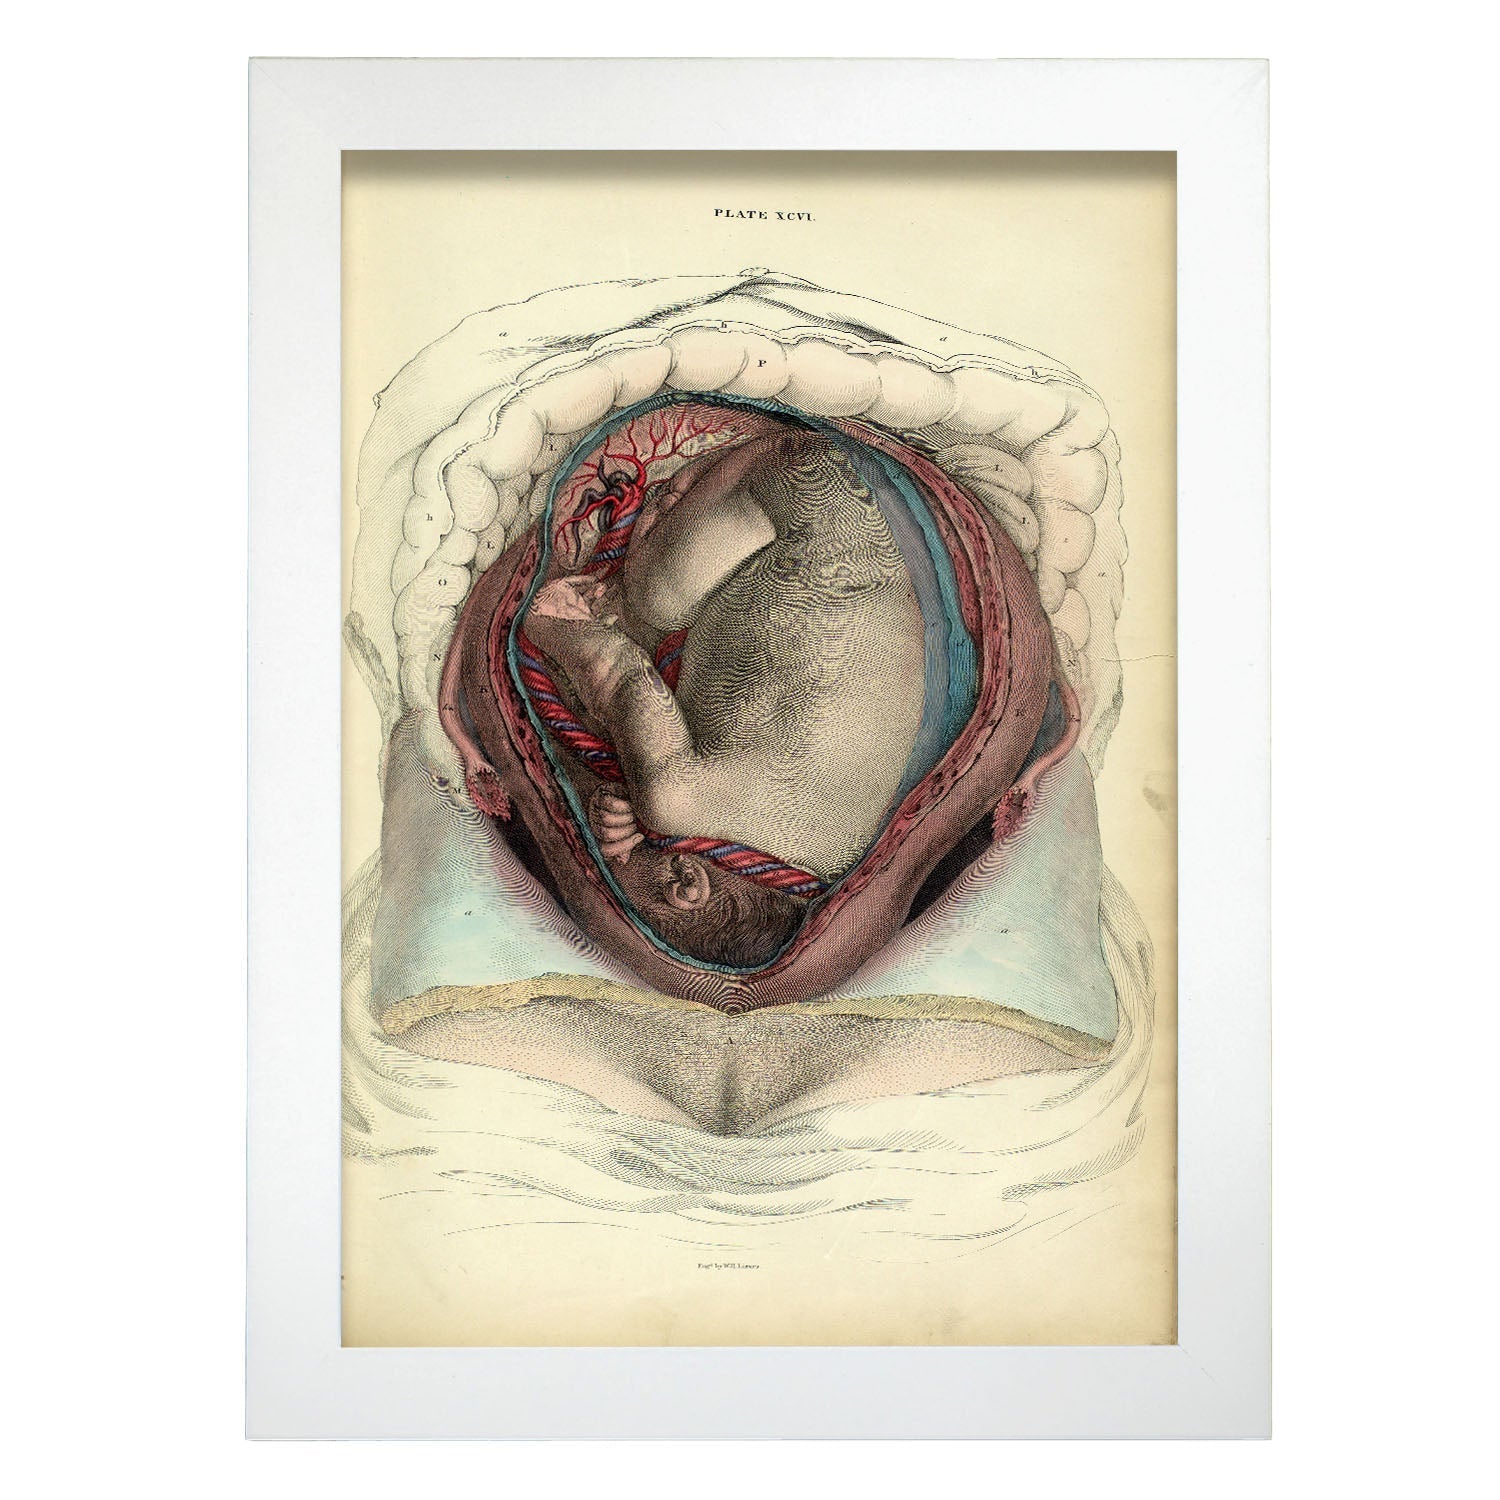 Gravid uterus with fetus-Artwork-Nacnic-A4-Marco Blanco-Nacnic Estudio SL